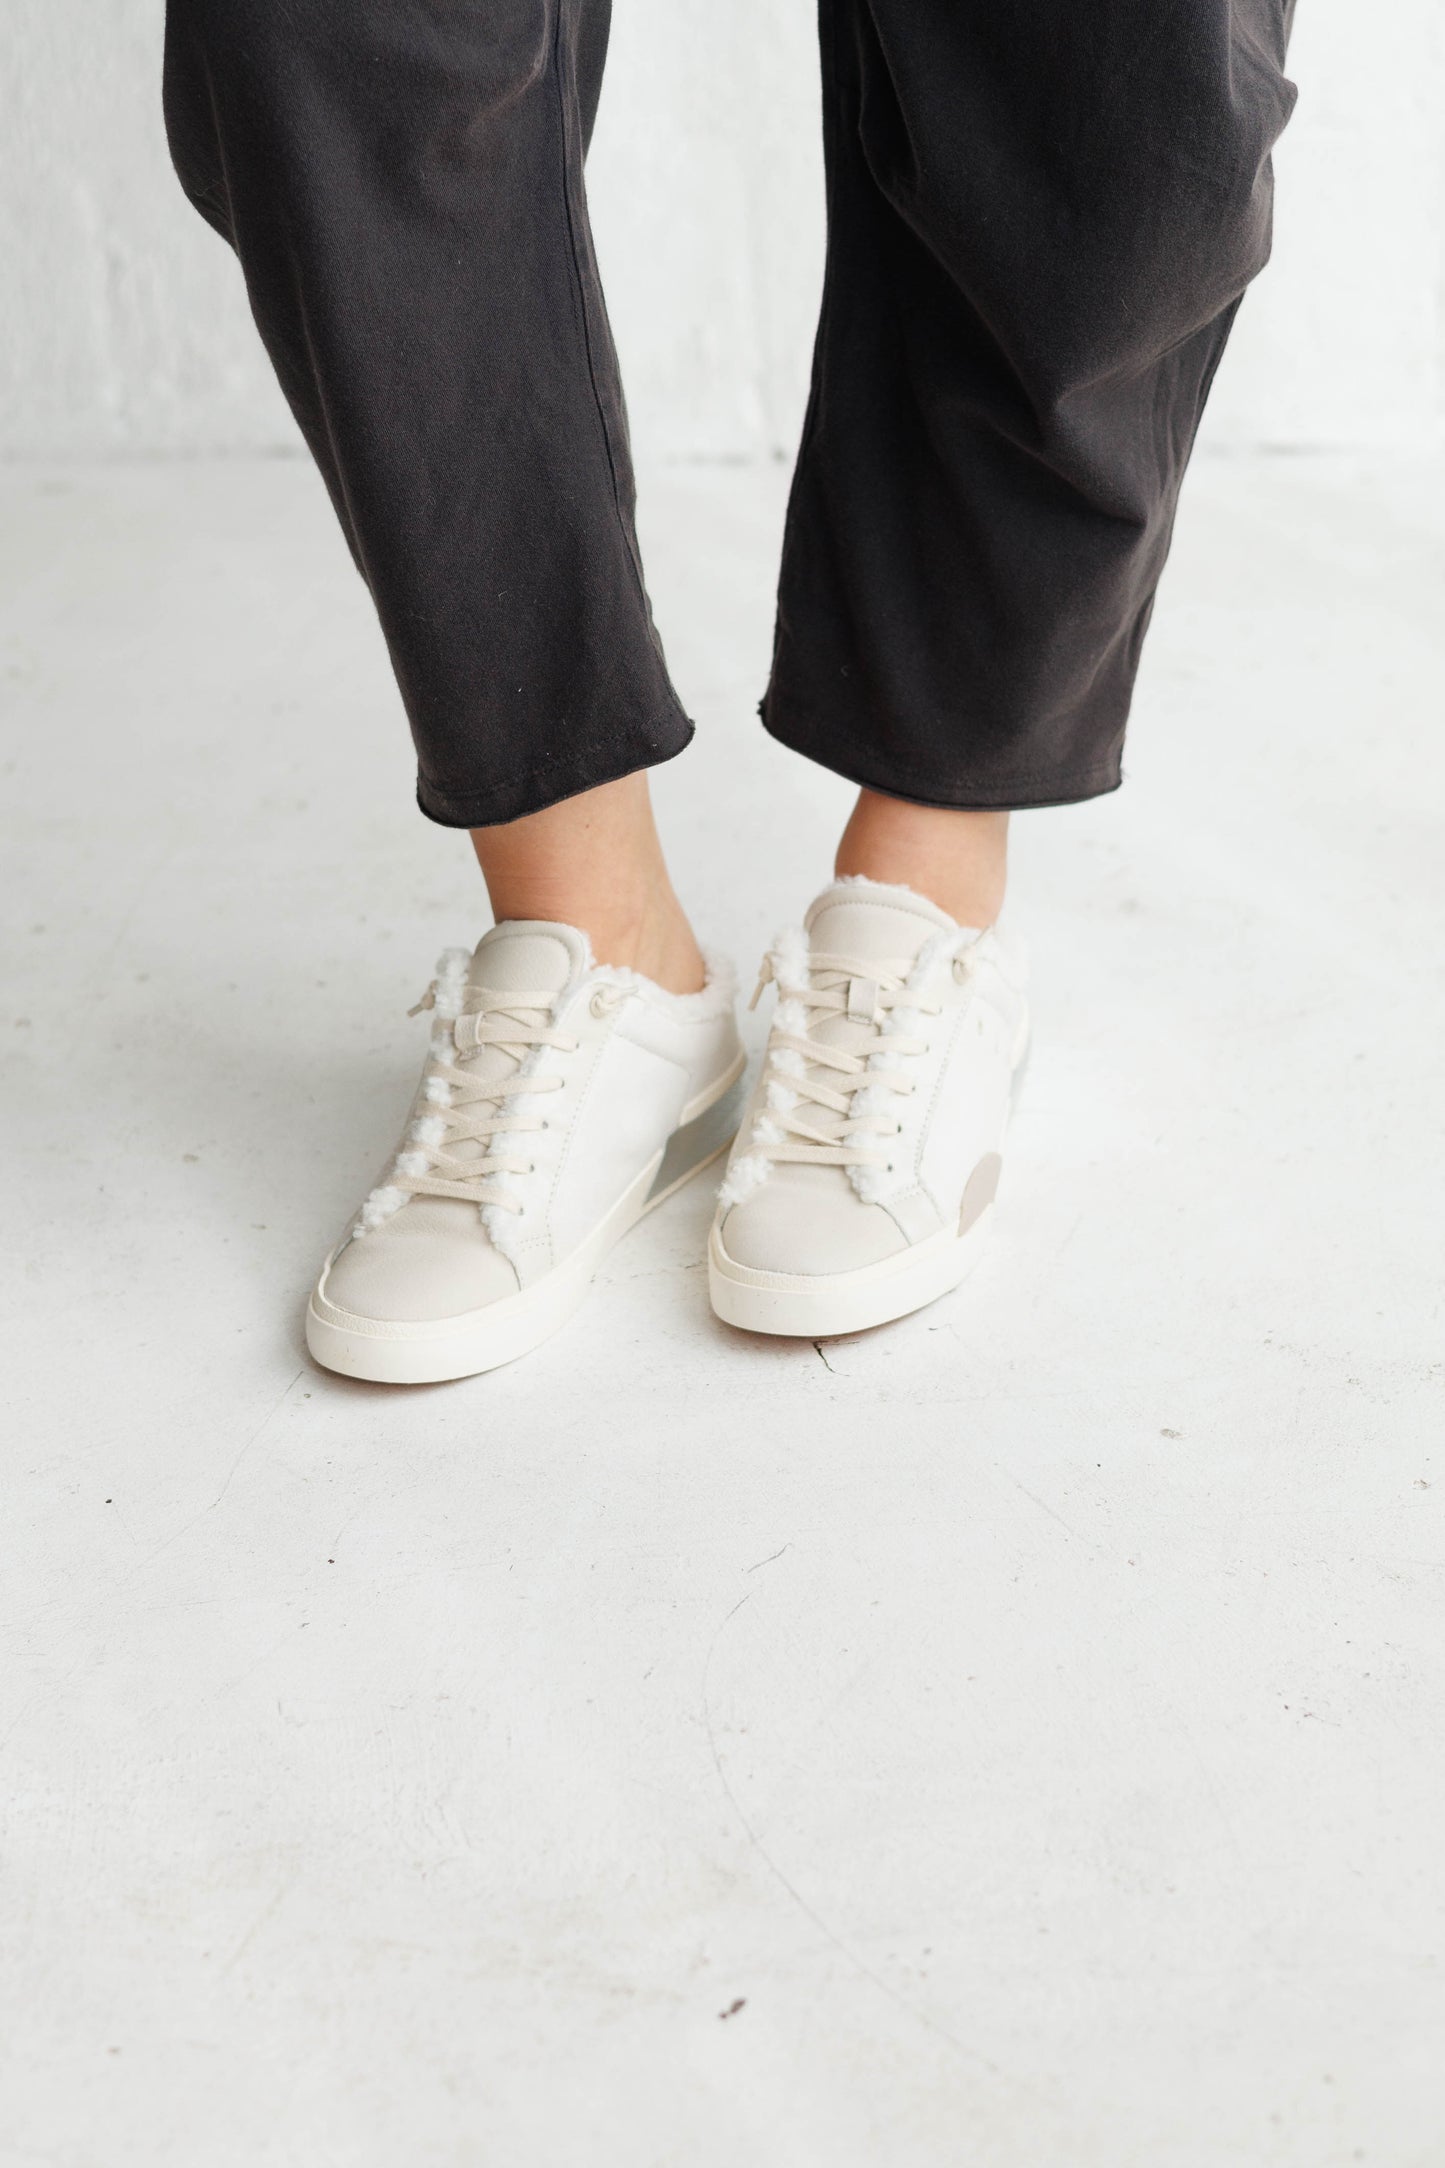 Dolce Vita - Zantel Sneaker, Off-White Crackled Leather